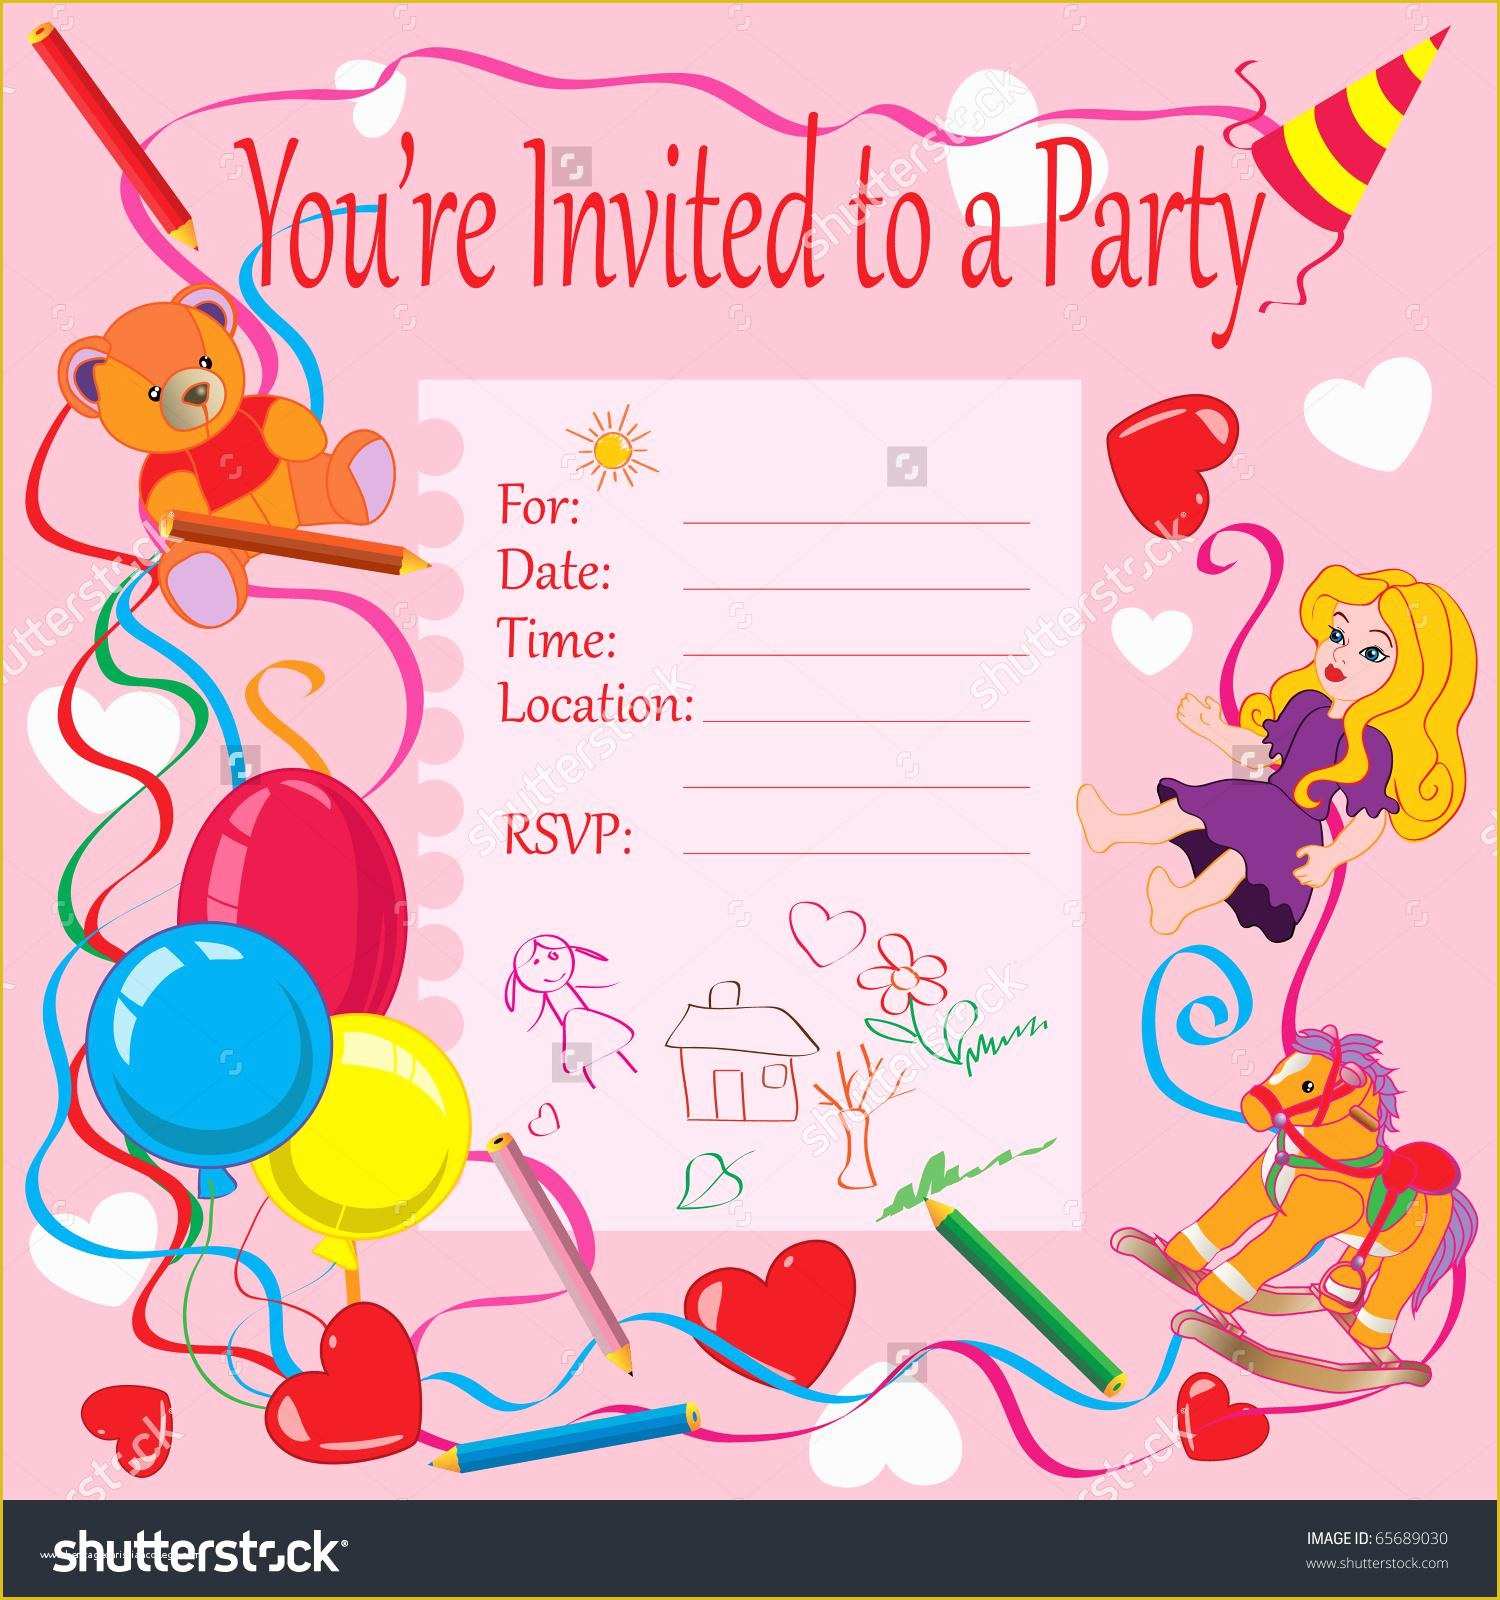 Free Printable Birthday Invitation Cards Templates Of 20 Birthday Invitations Cards – Sample Wording Printable